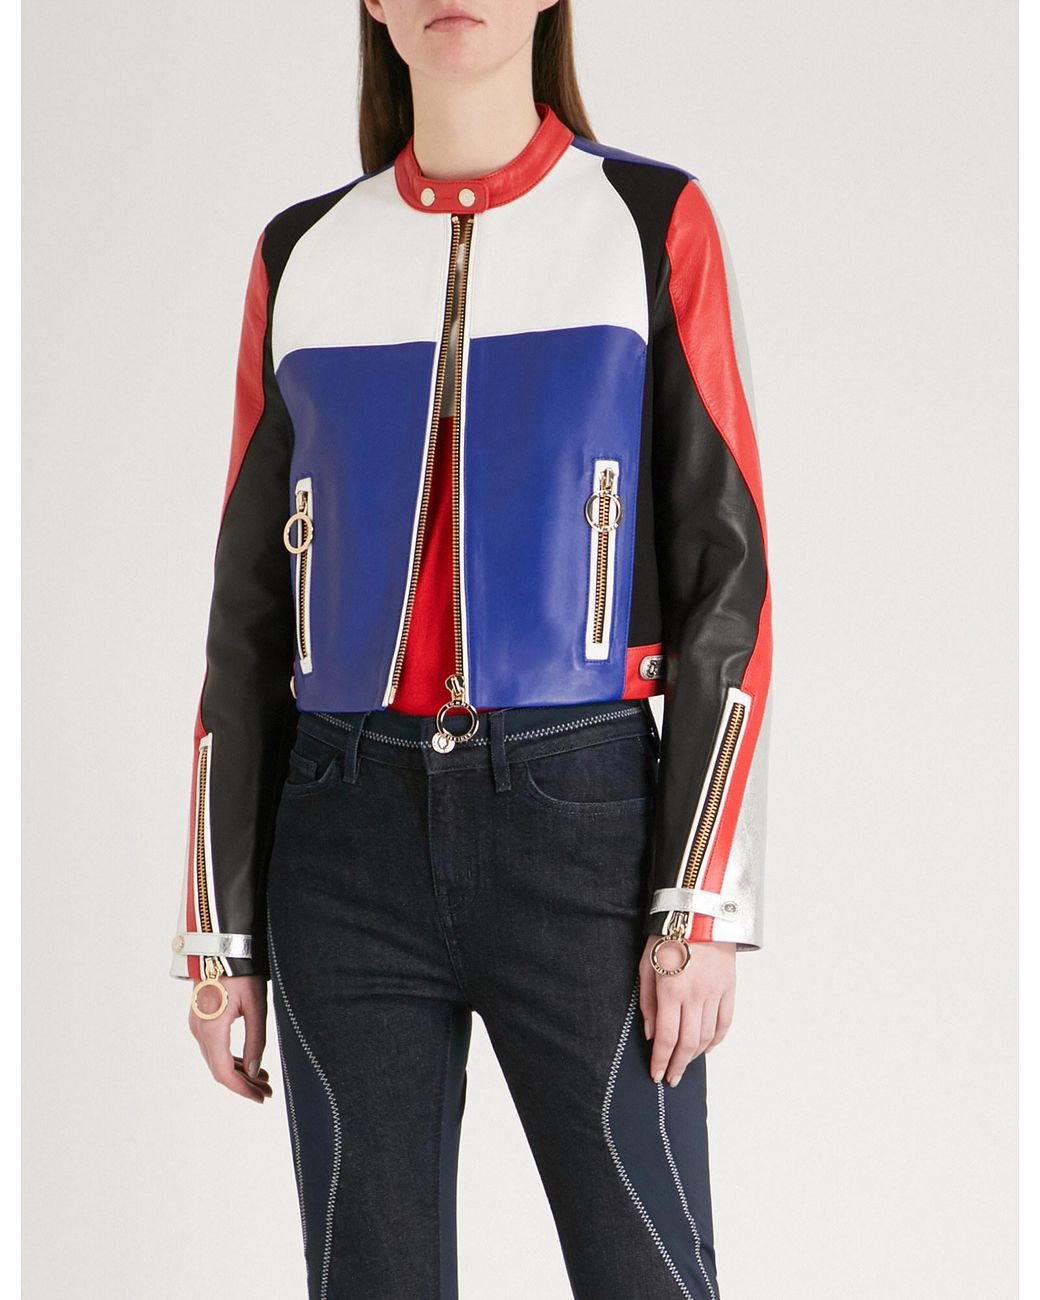 Tommy Hilfiger X Gigi Hadid Colourblocked Leather Jacket | Lyst Canada